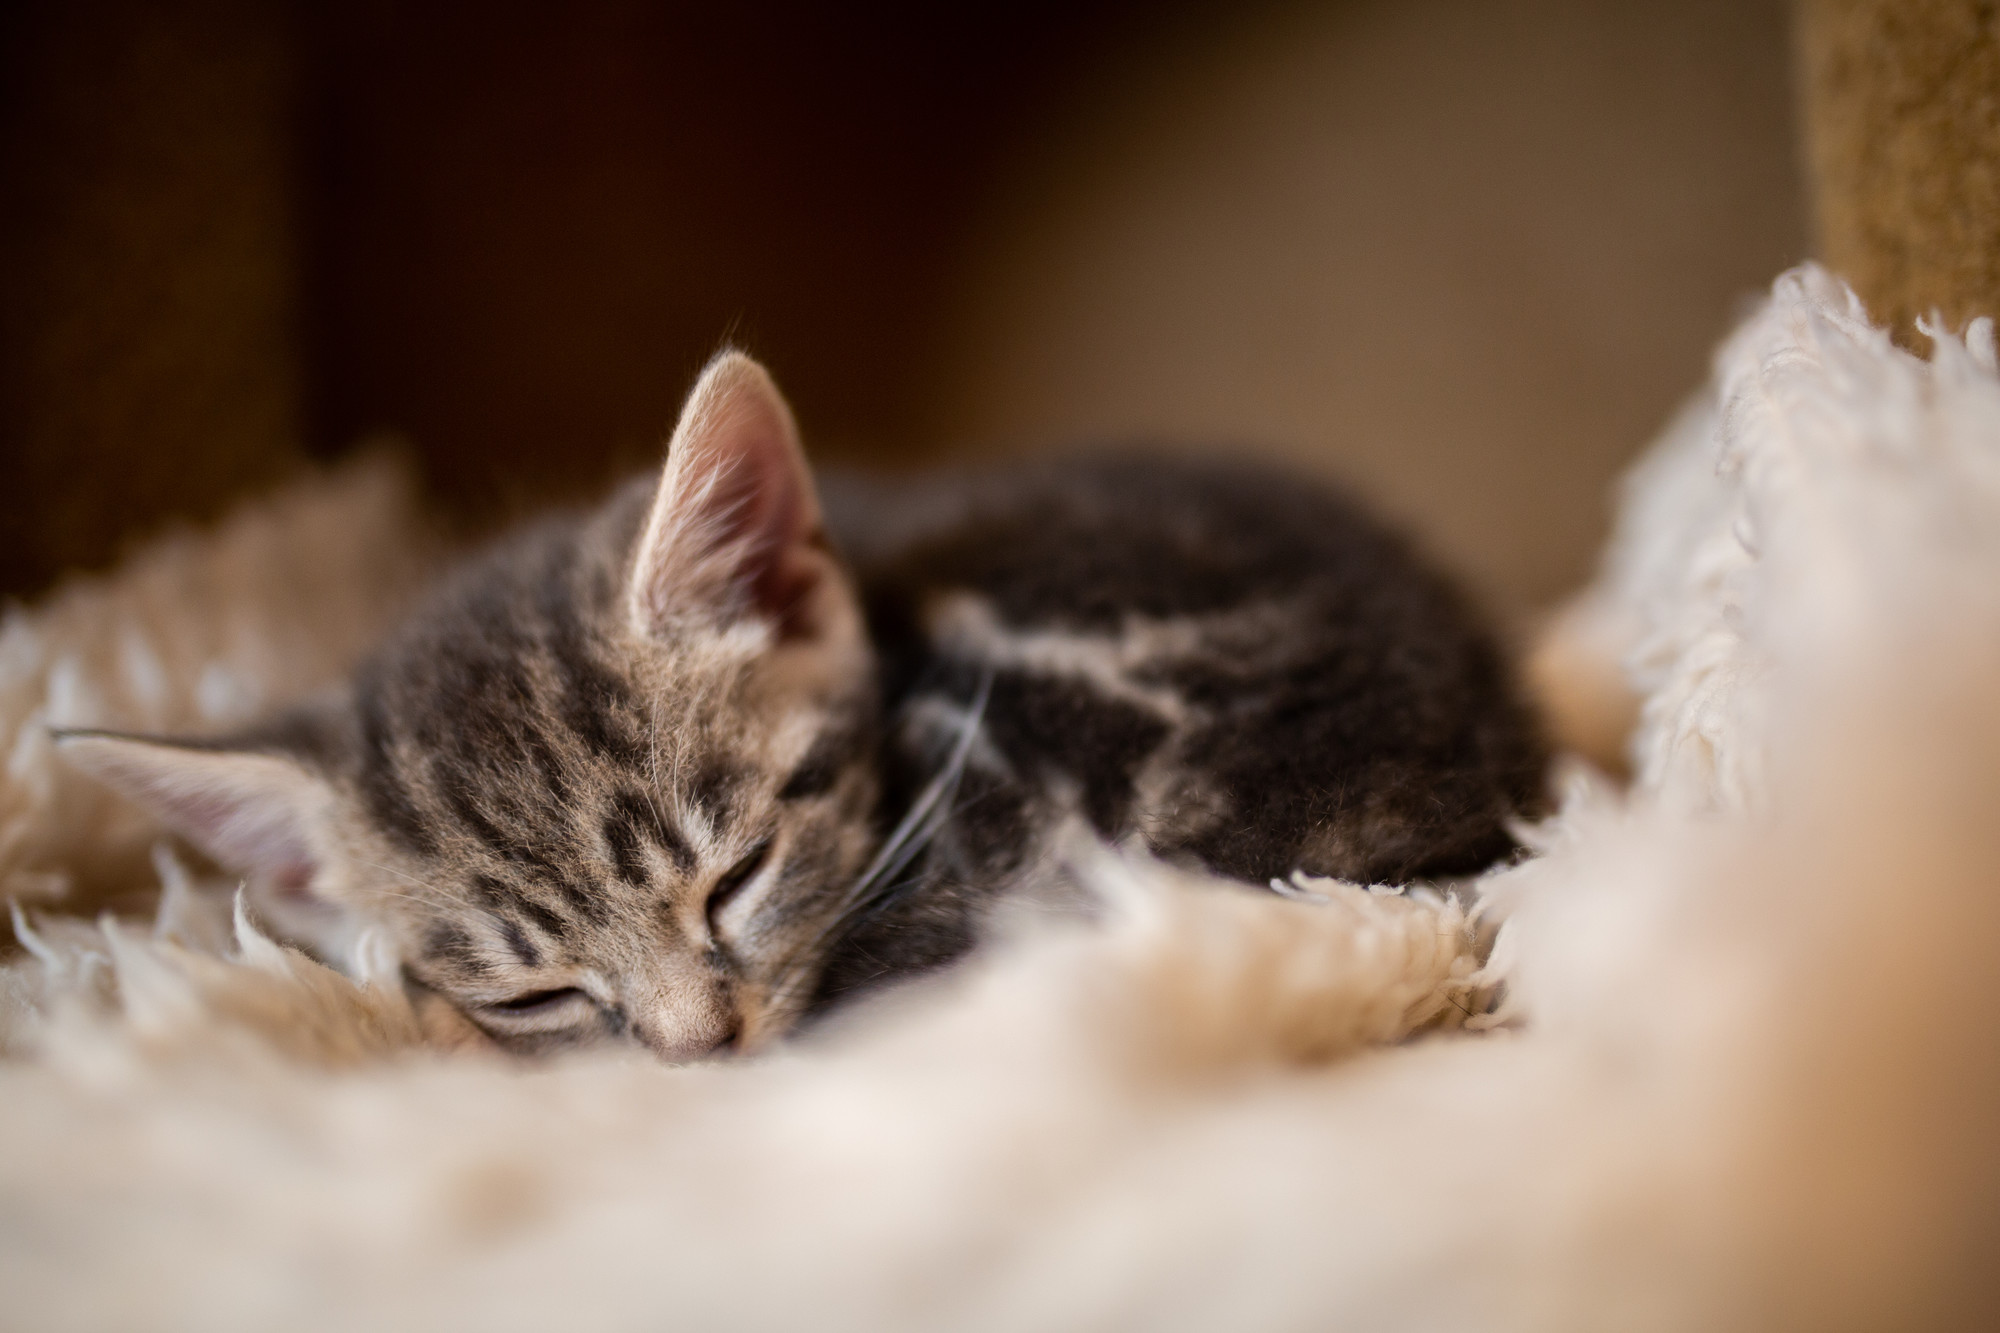 Kitten cuddled into warm blanket